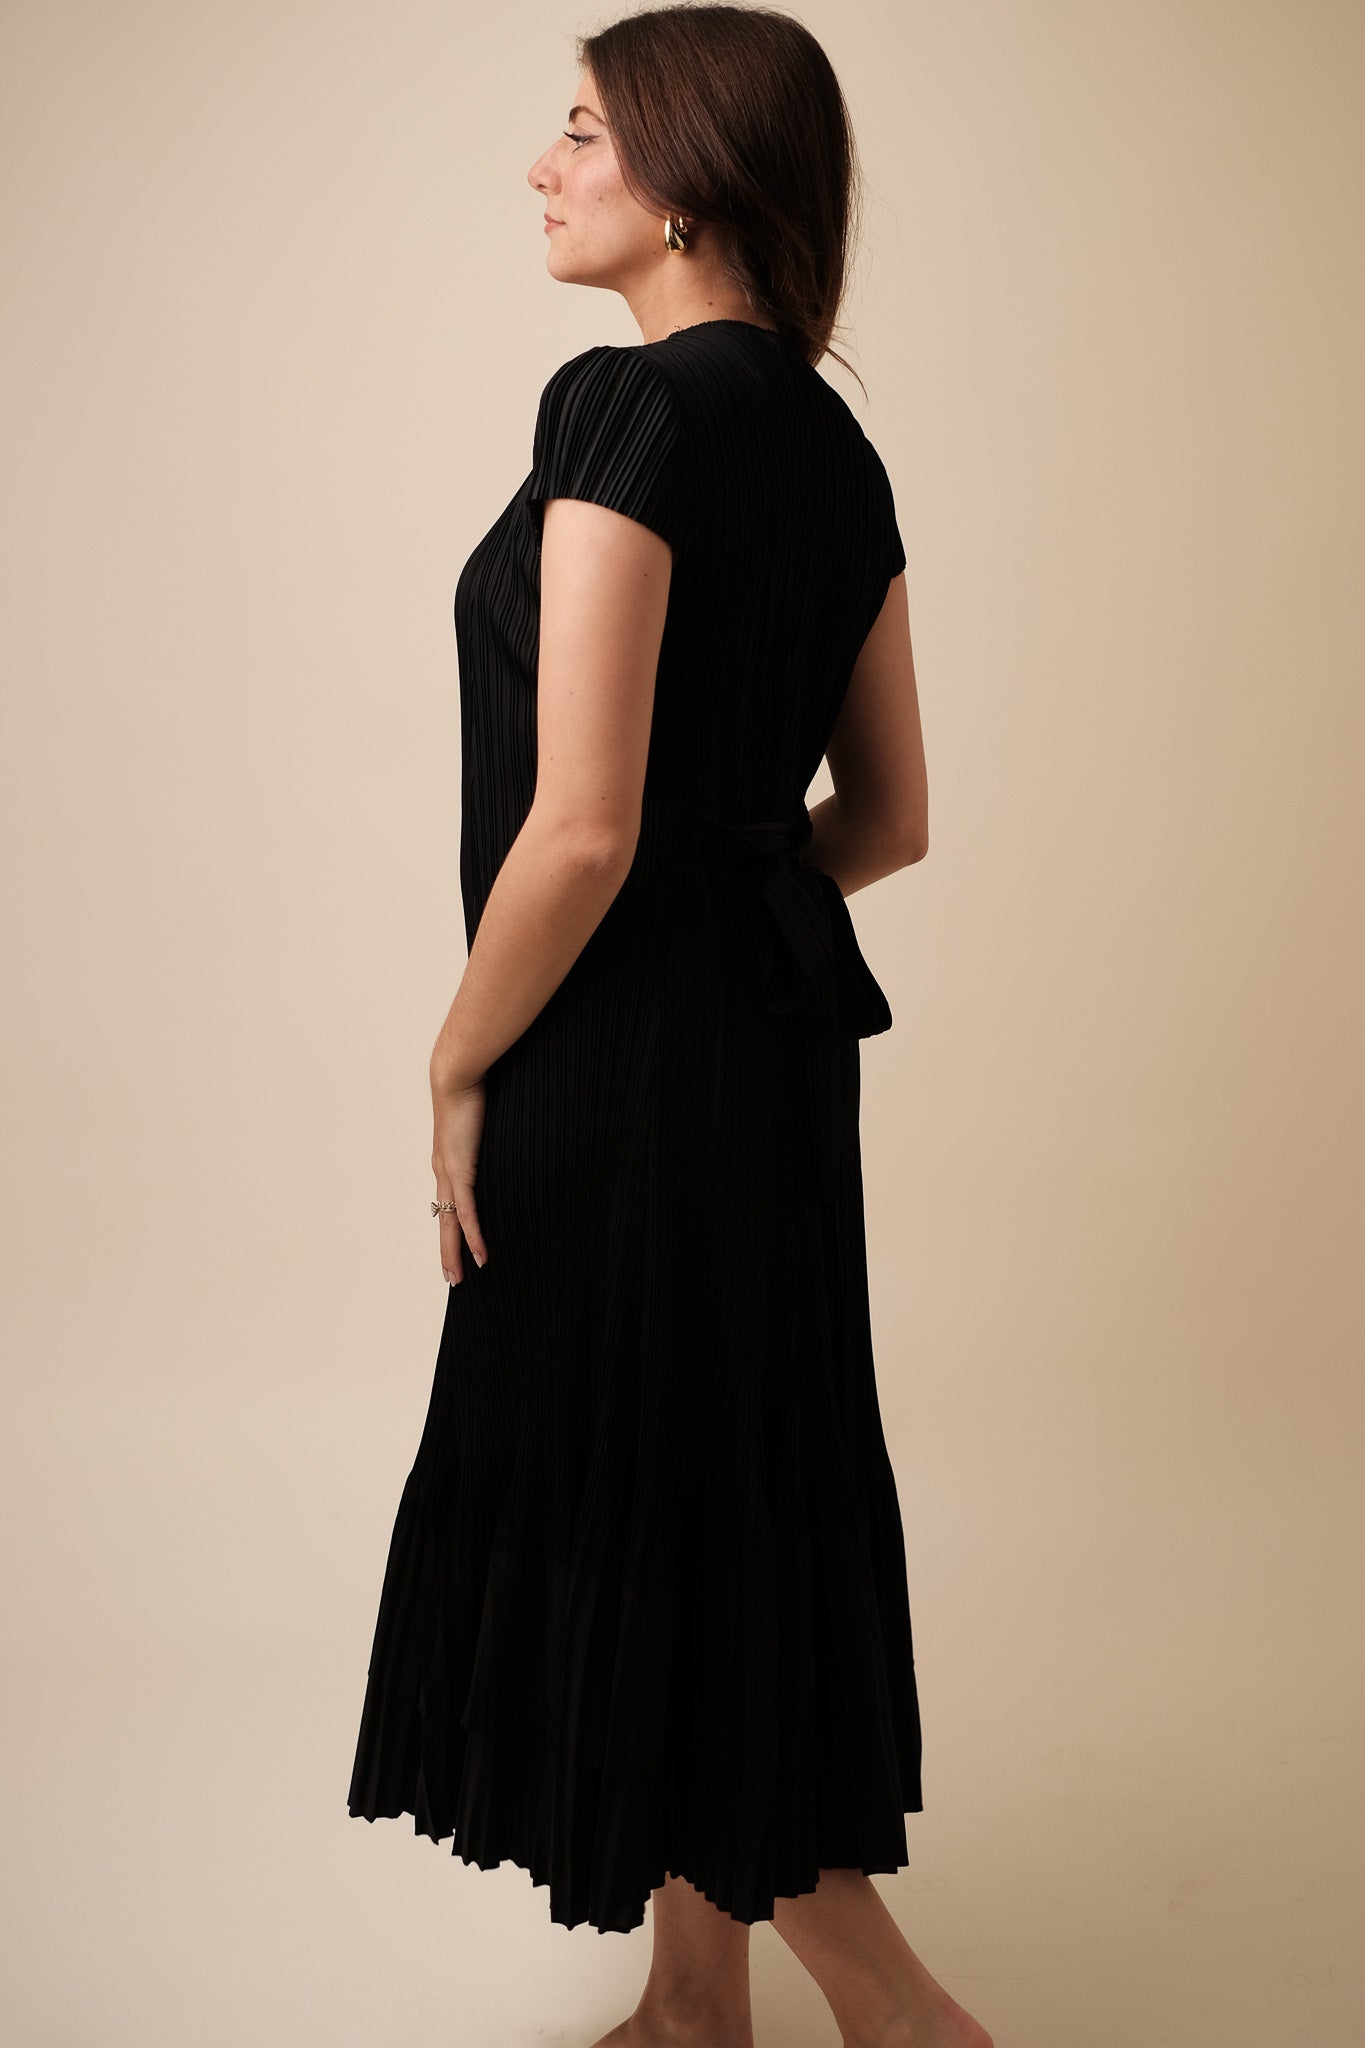 Current Air Helen Pleated Color Block Midi Dress (Black)